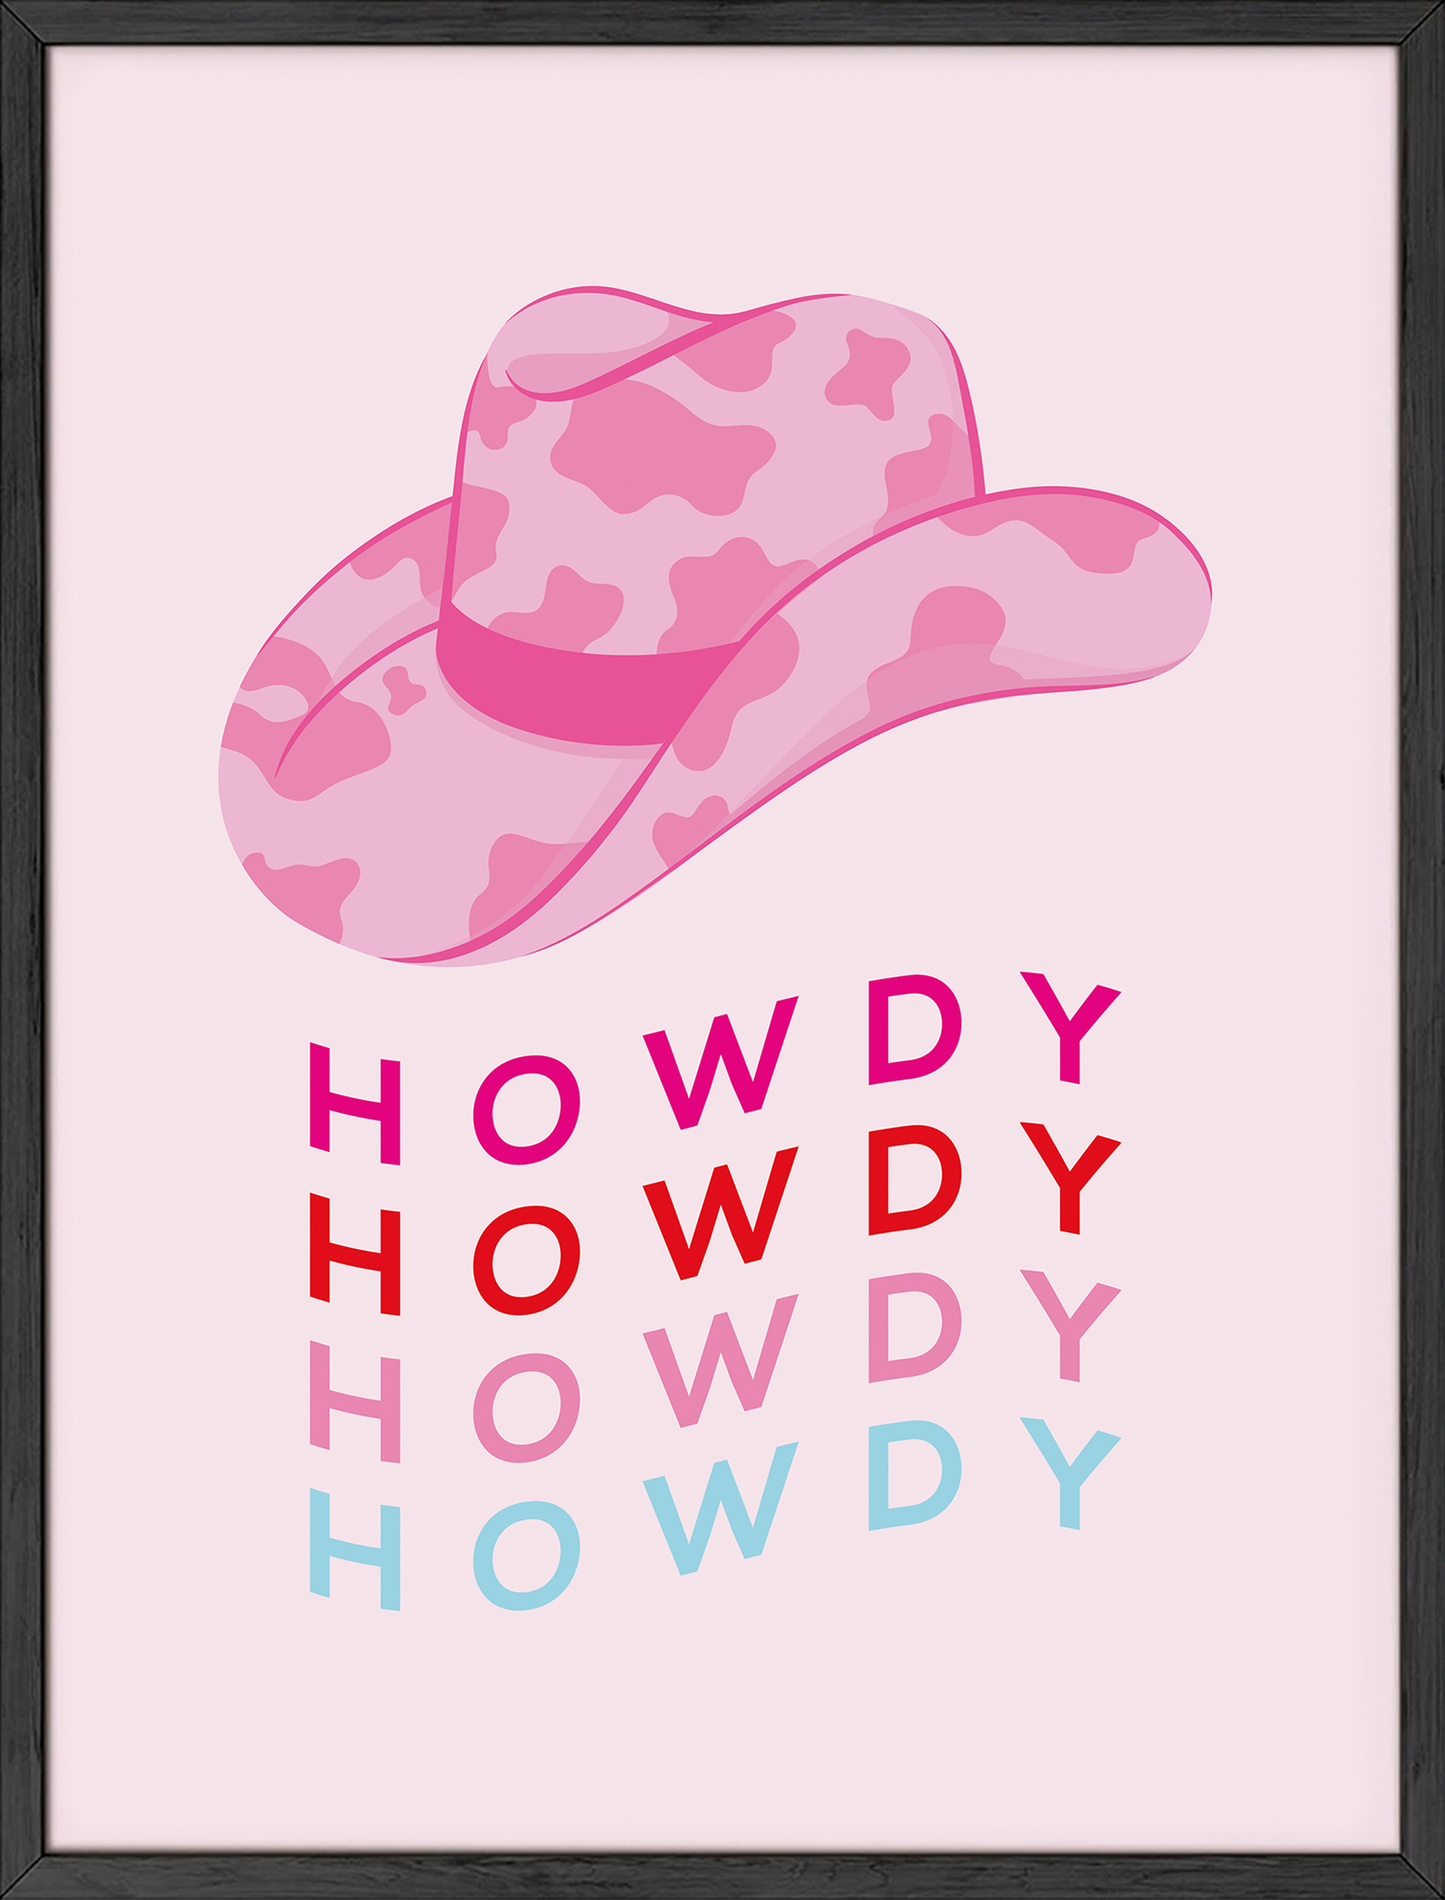 Howdy